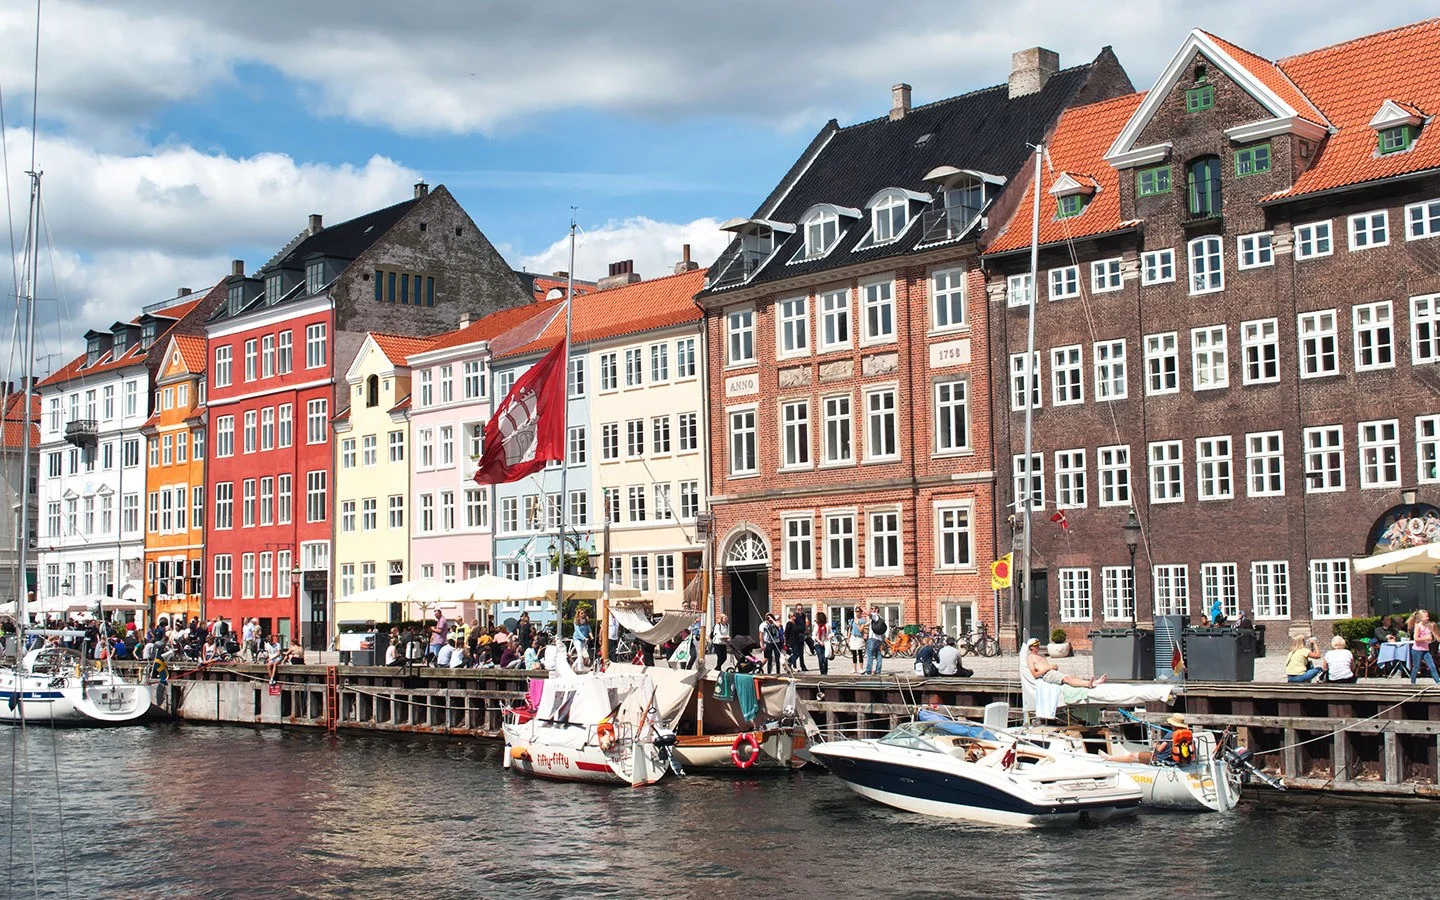 Along the waterfront in Nyhavn, Copenhagen